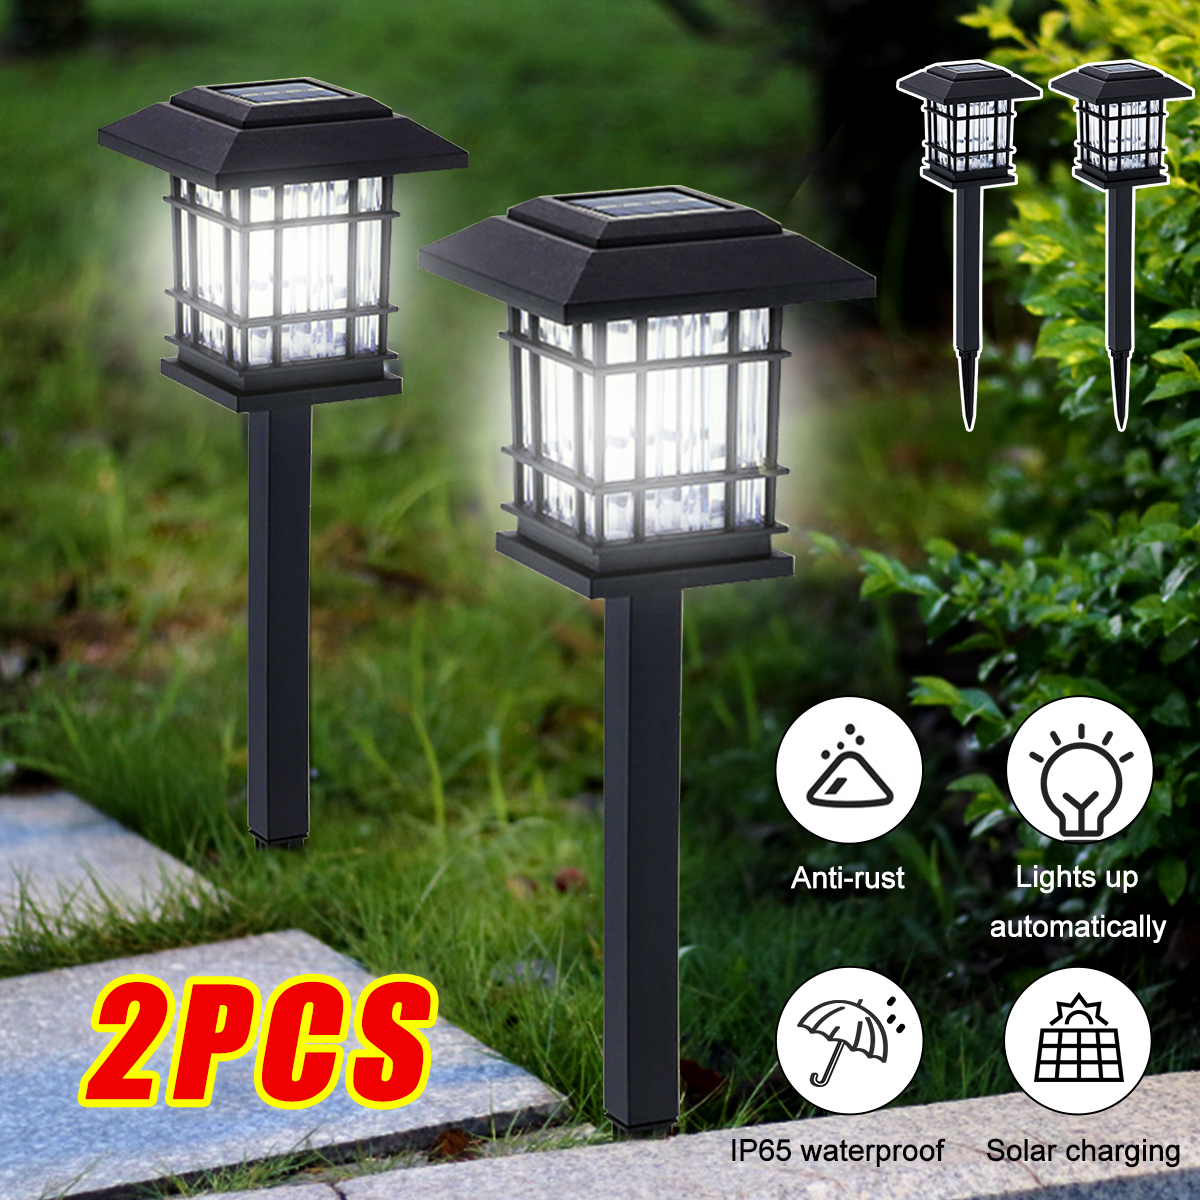 2PCS-Auto-Sensing-LED-Solar-Lamp-Garden-Lamps-For-Outdoor-Patio-Lawn-1755204-1